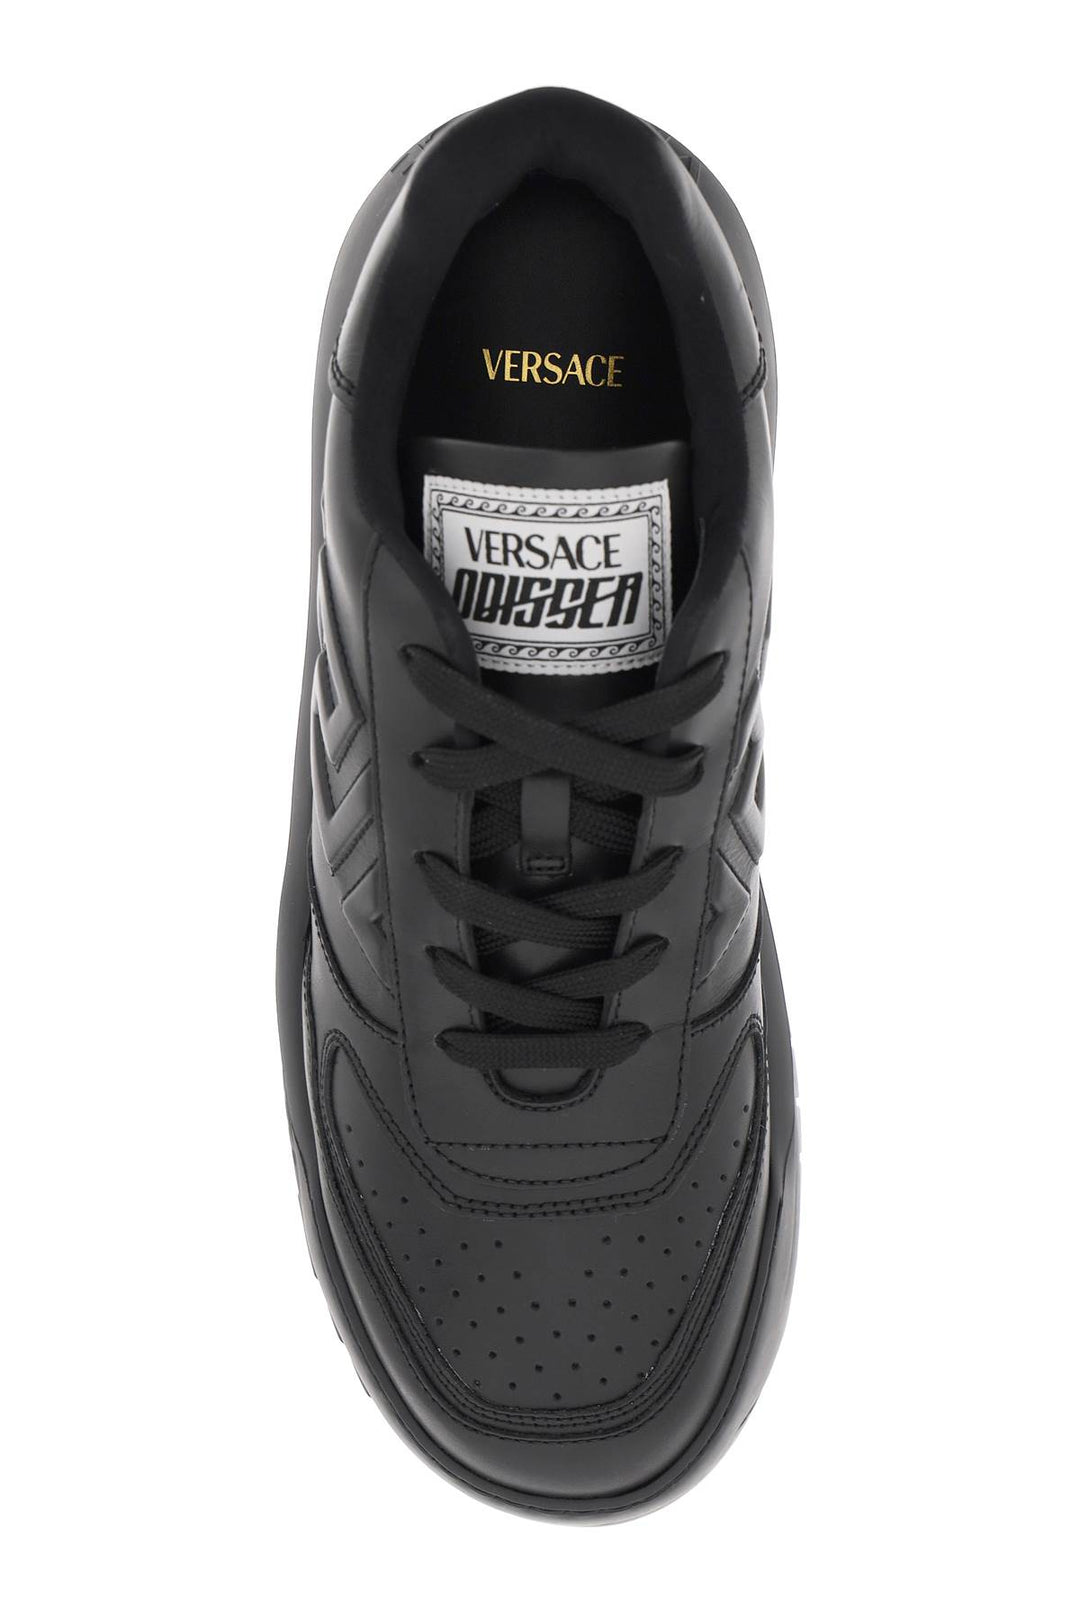 Versace Odissea Sneakers   Nero